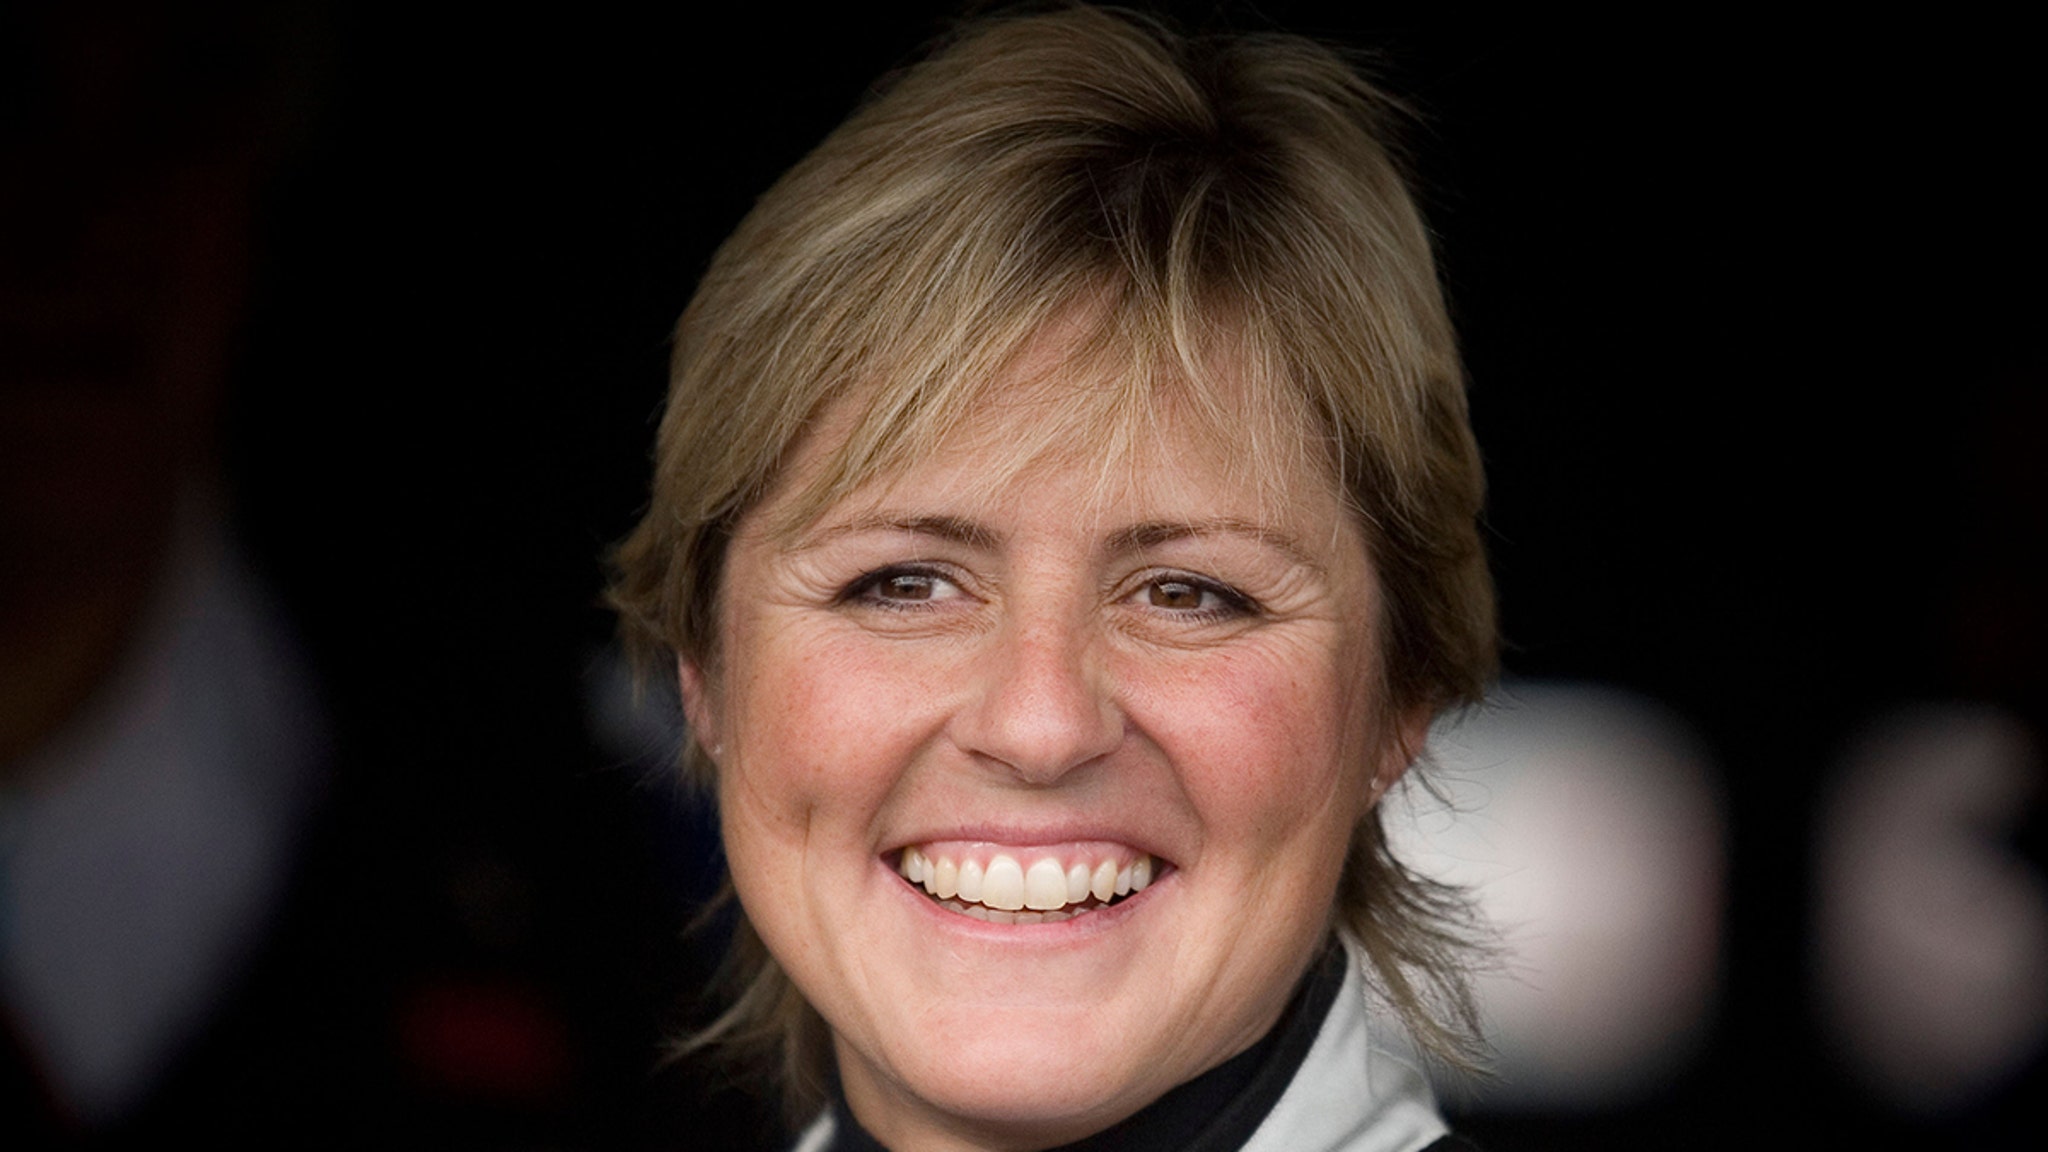 Former Top Gear host race manager Sabine Schmitz dies at 51